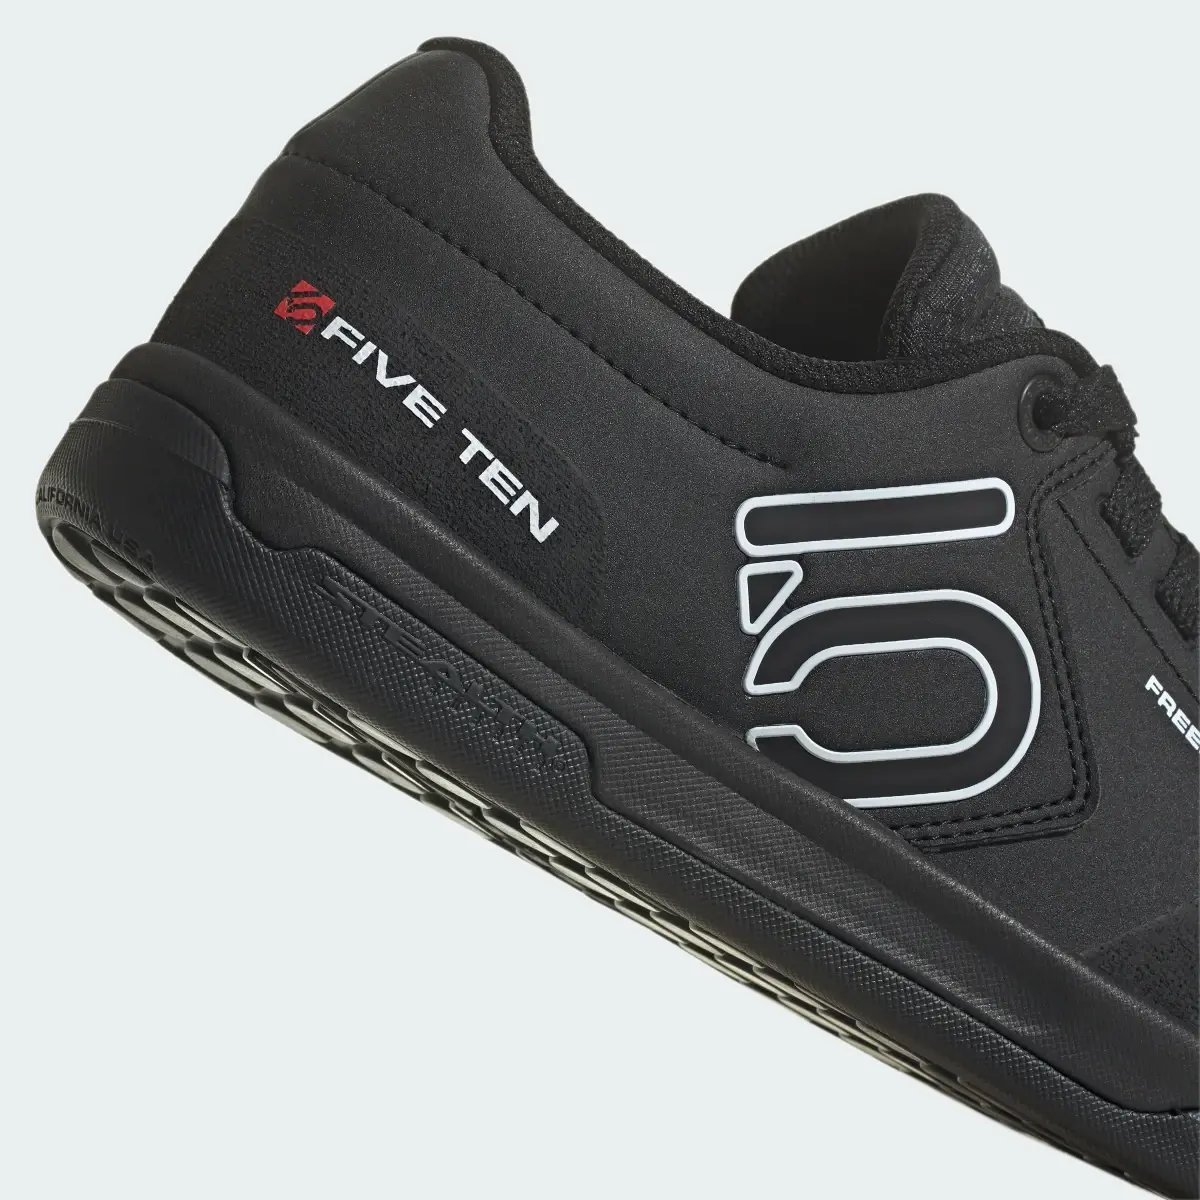 Adidas Five Ten Freerider Pro Mountain Bike Shoes. 3